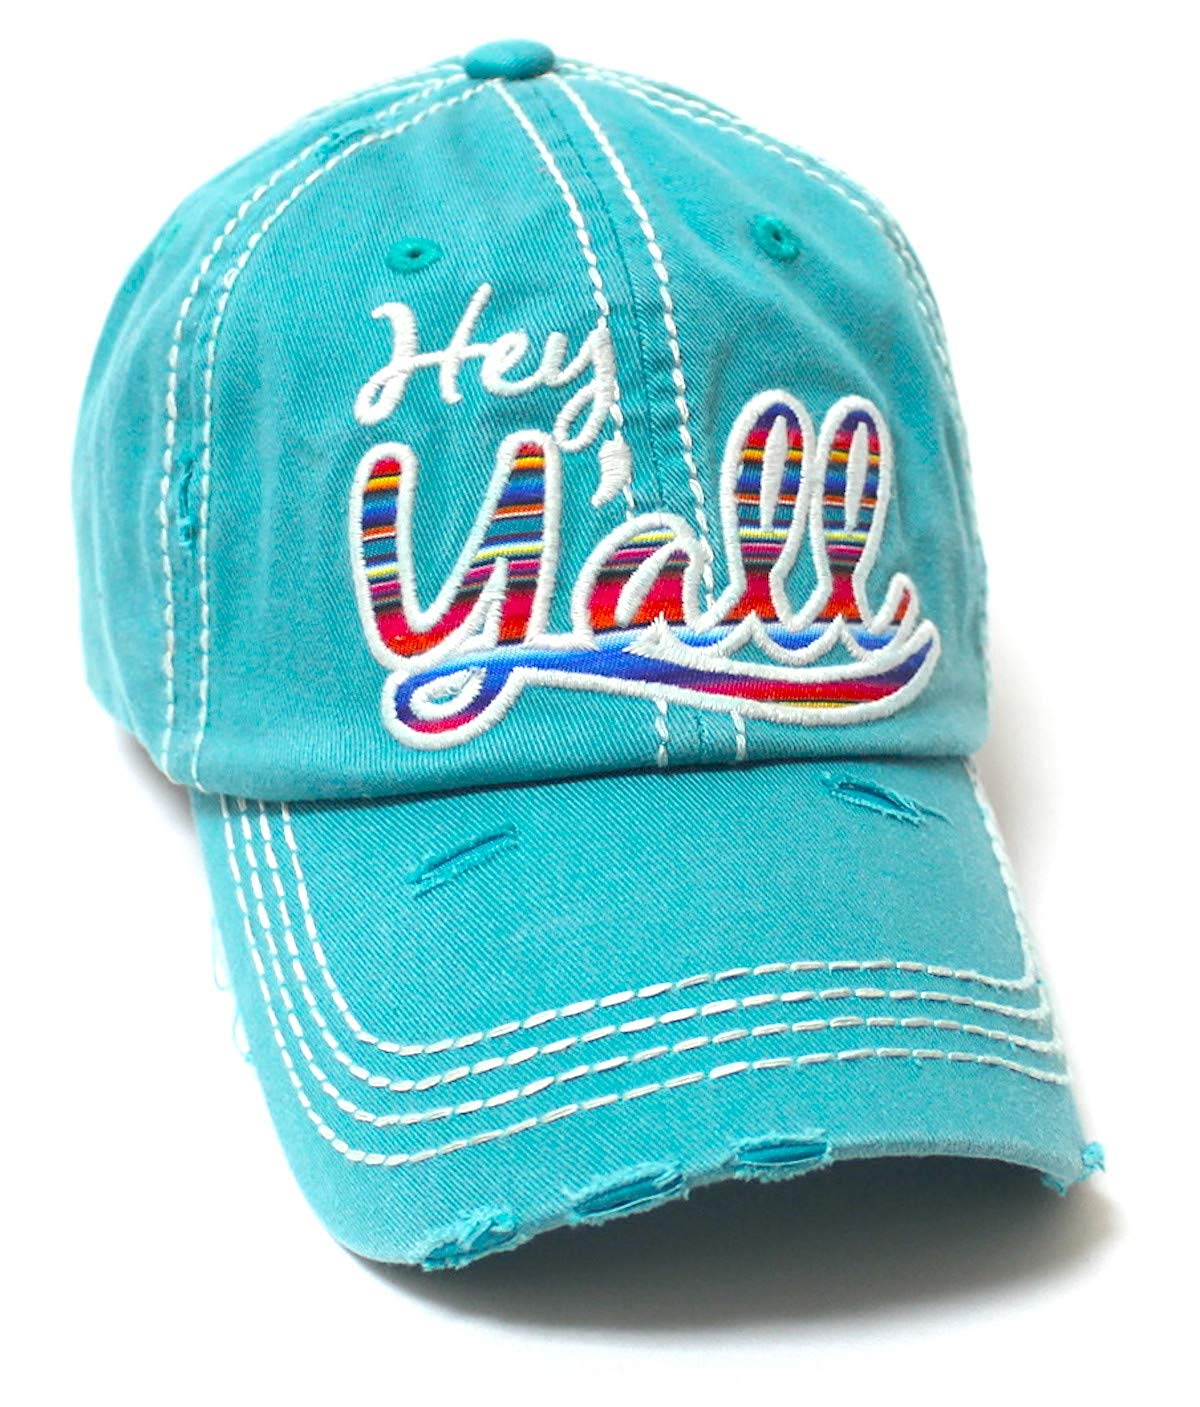 Hey Y'all Serape Monogram Embroidery Adjustable Hat, Vintage Turquoise - Caps 'N Vintage 